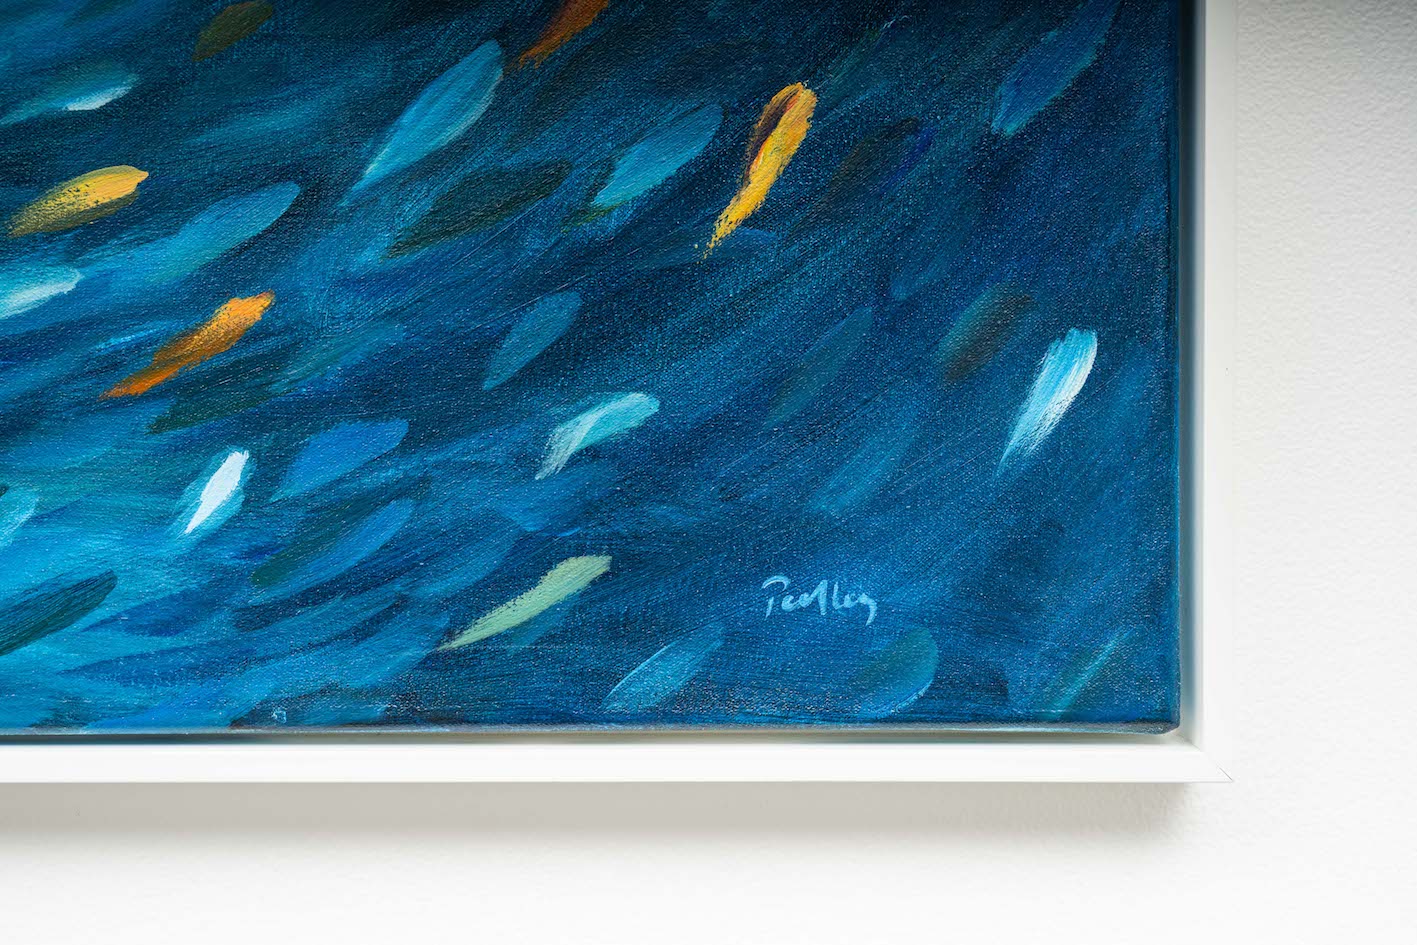 Unison Shimmer II - Robyn Pedley Ocean Landscape, Acrylic on canvas, 70 x 110cm, White frame. Bobbie P Gallery